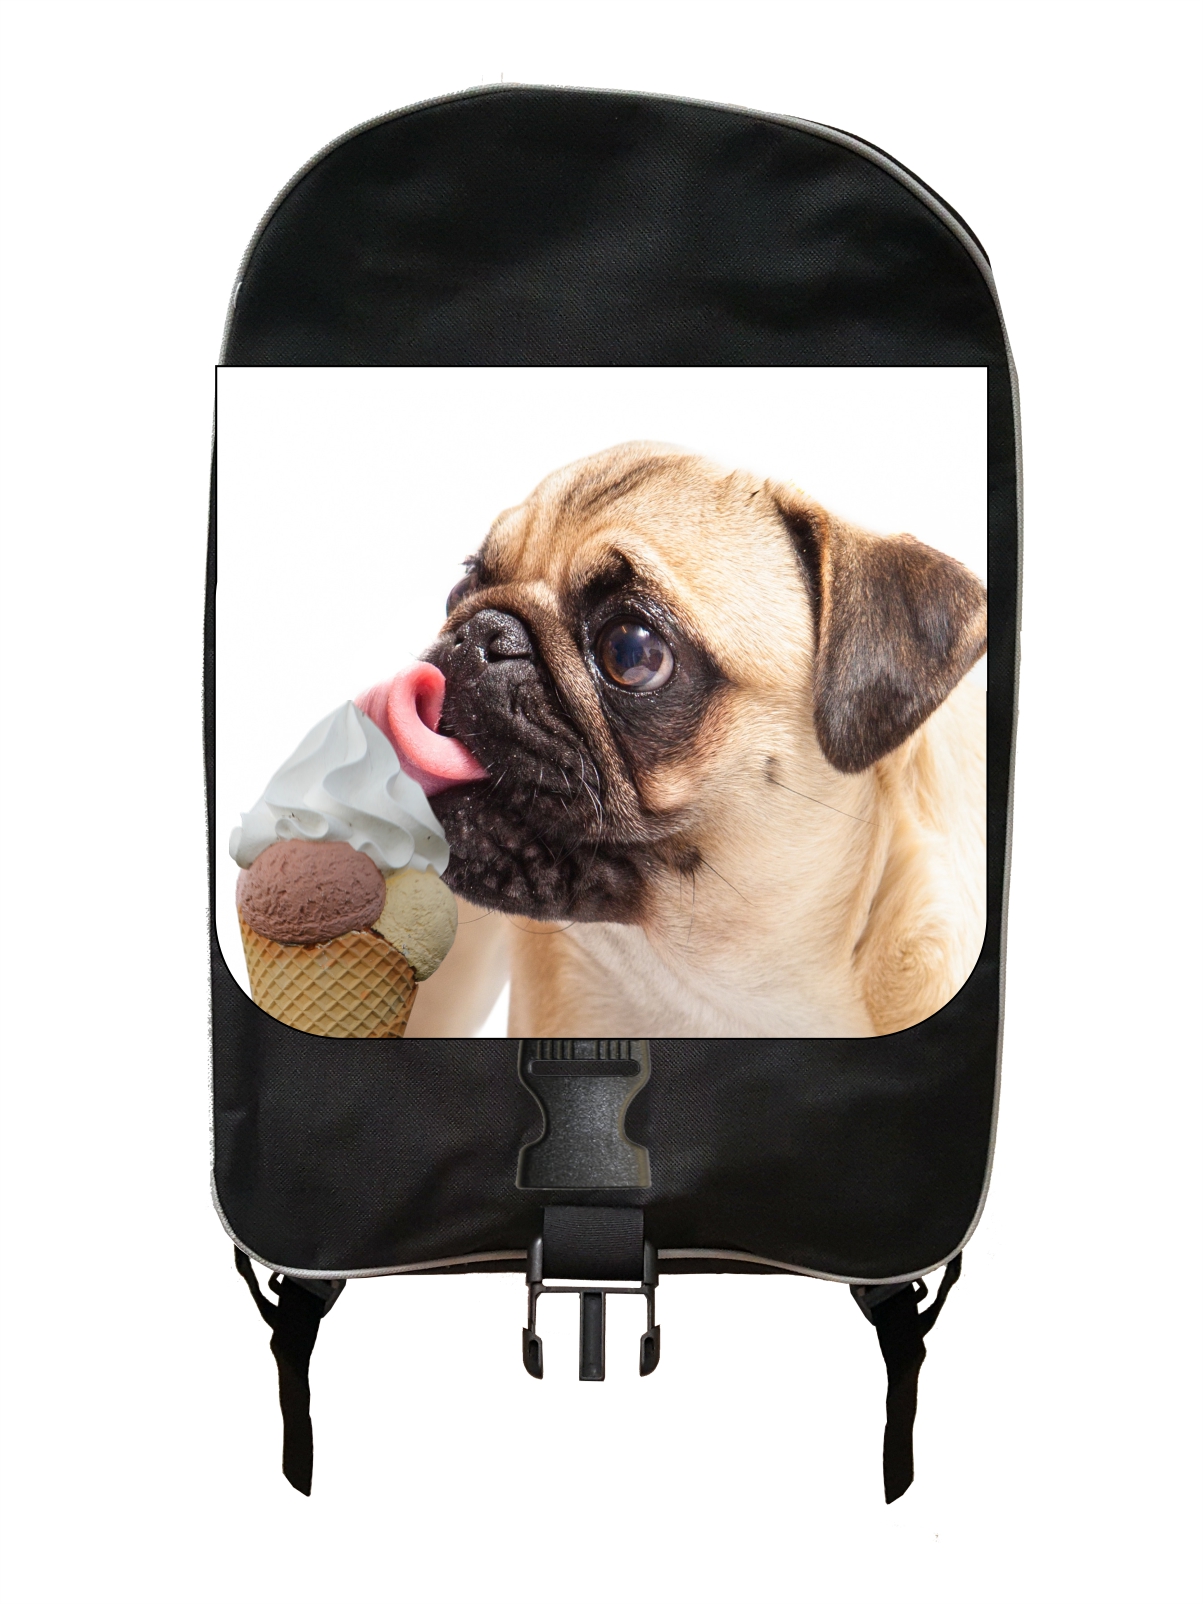 Pug Puppy Dog Licking Ice Cream - Girls Large Black School Backpack - image 1 of 4